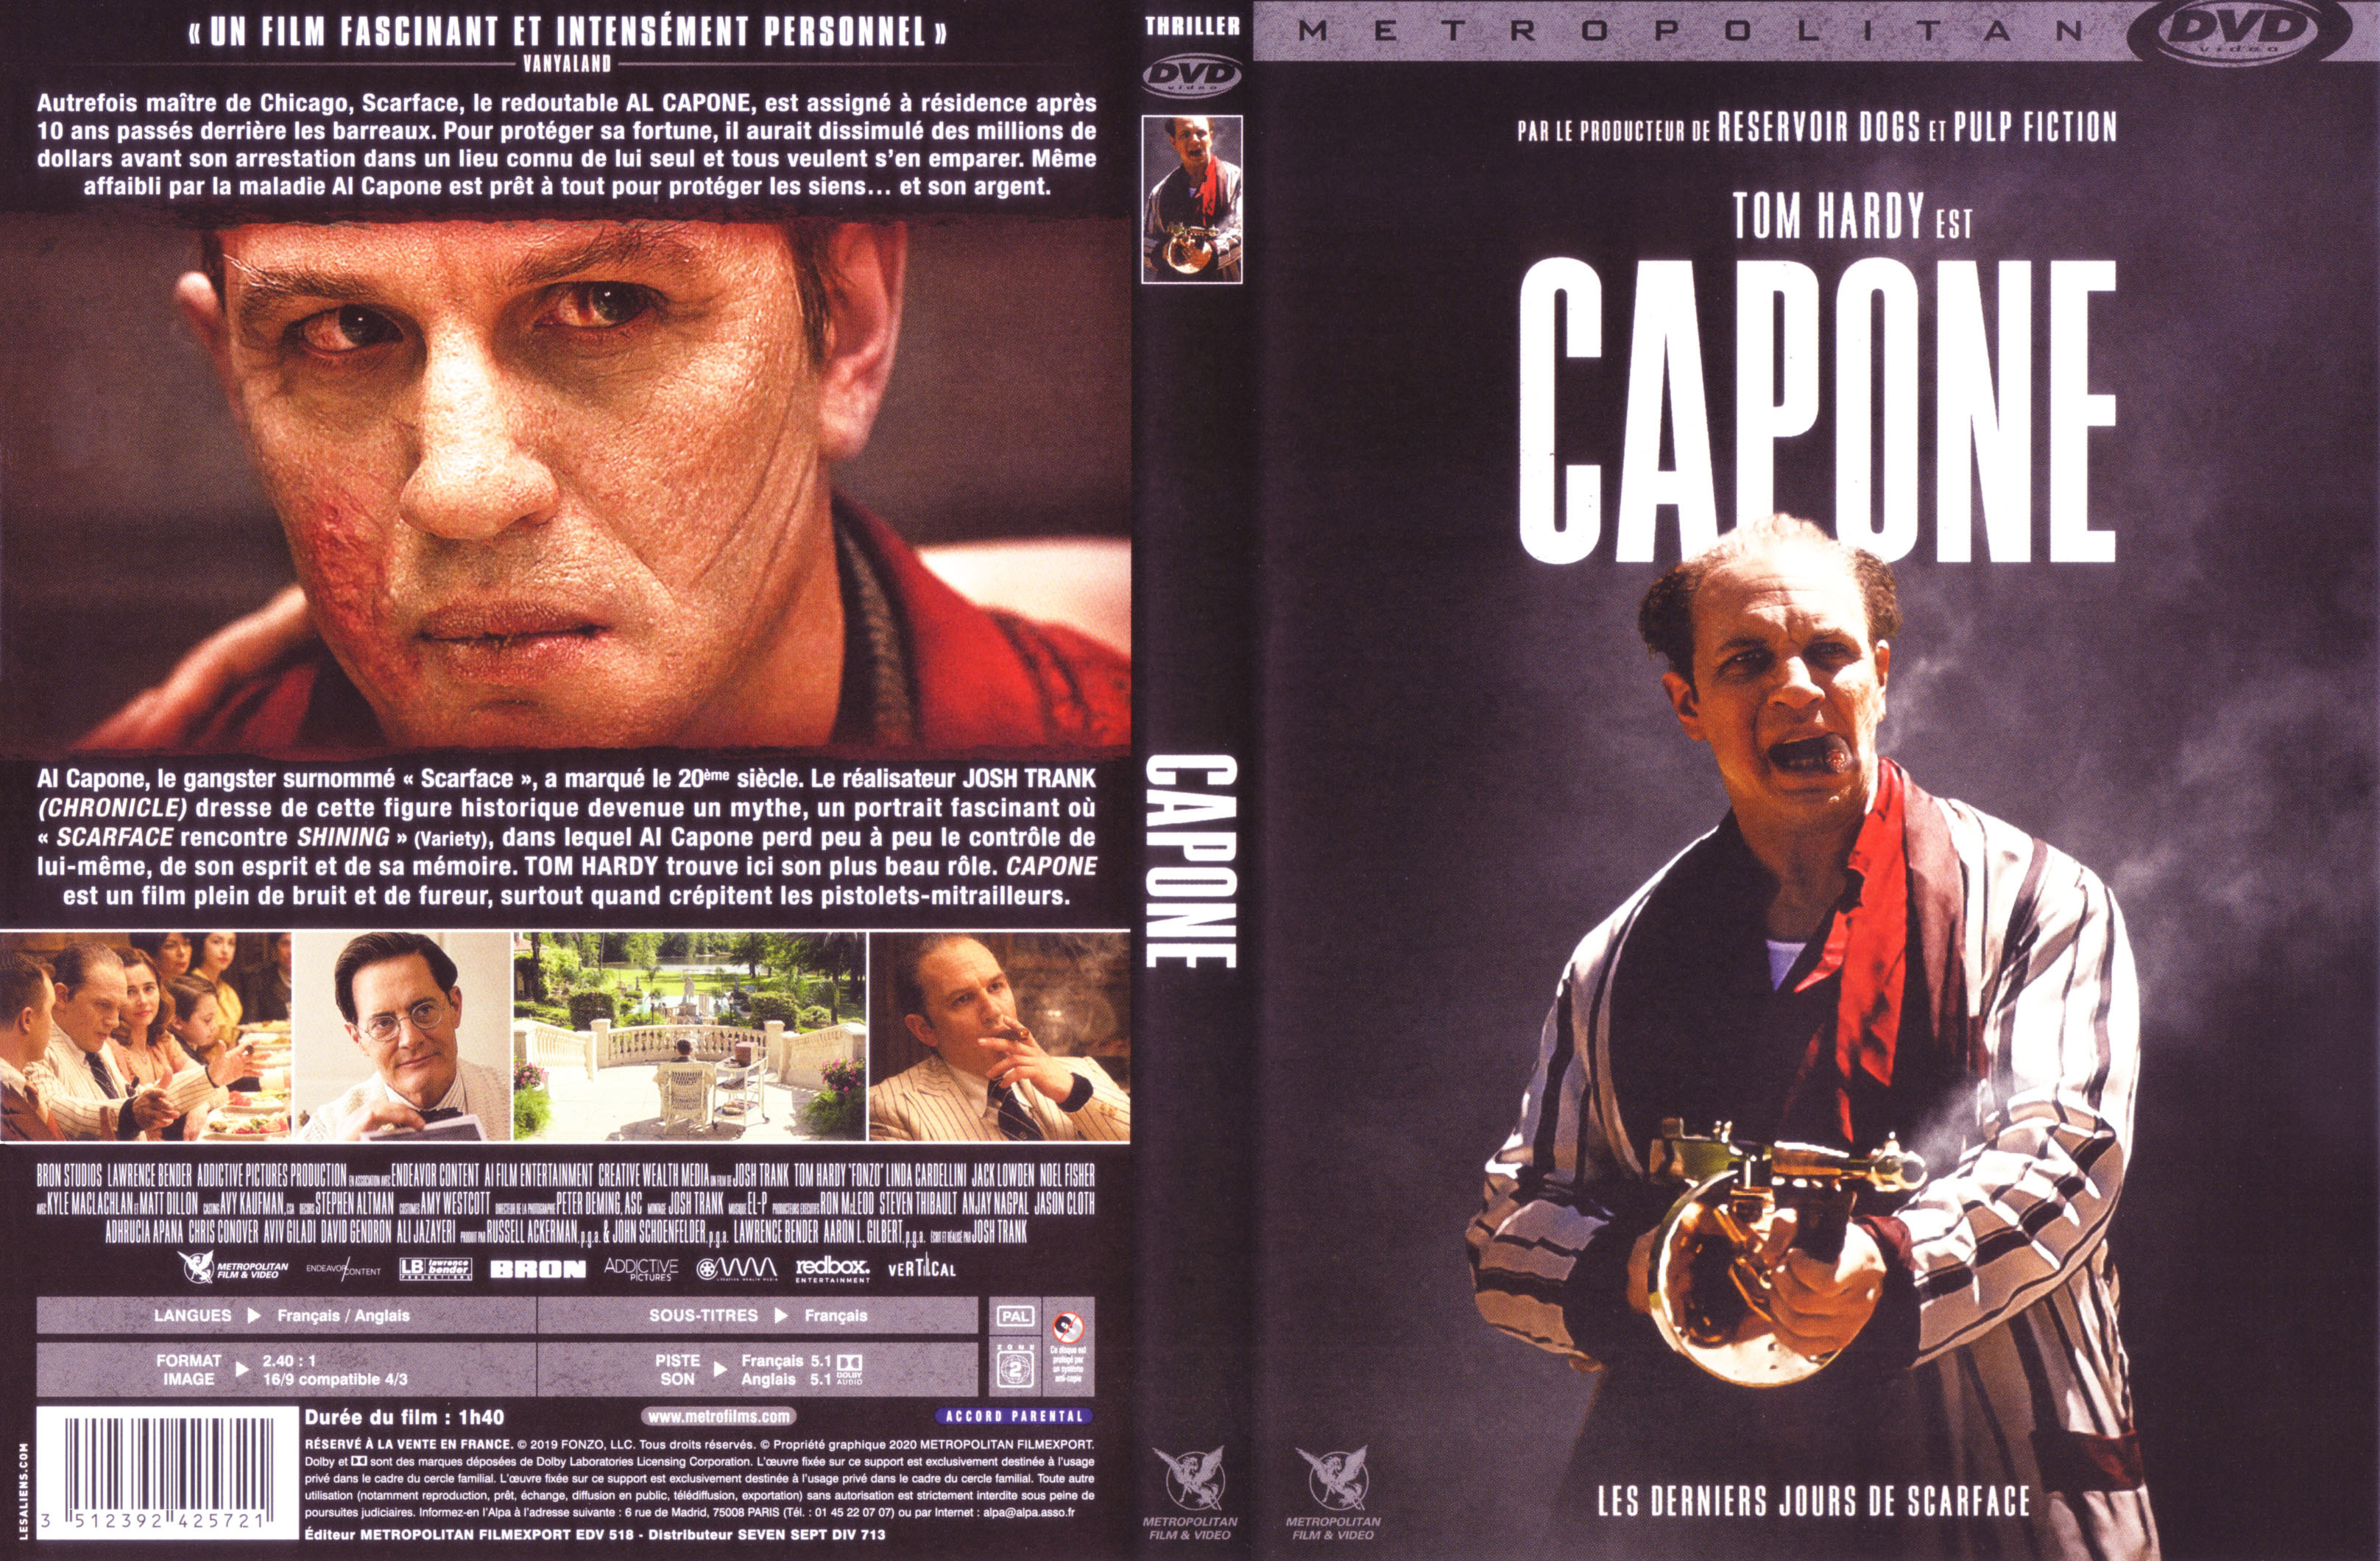 Jaquette DVD Capone (2019)